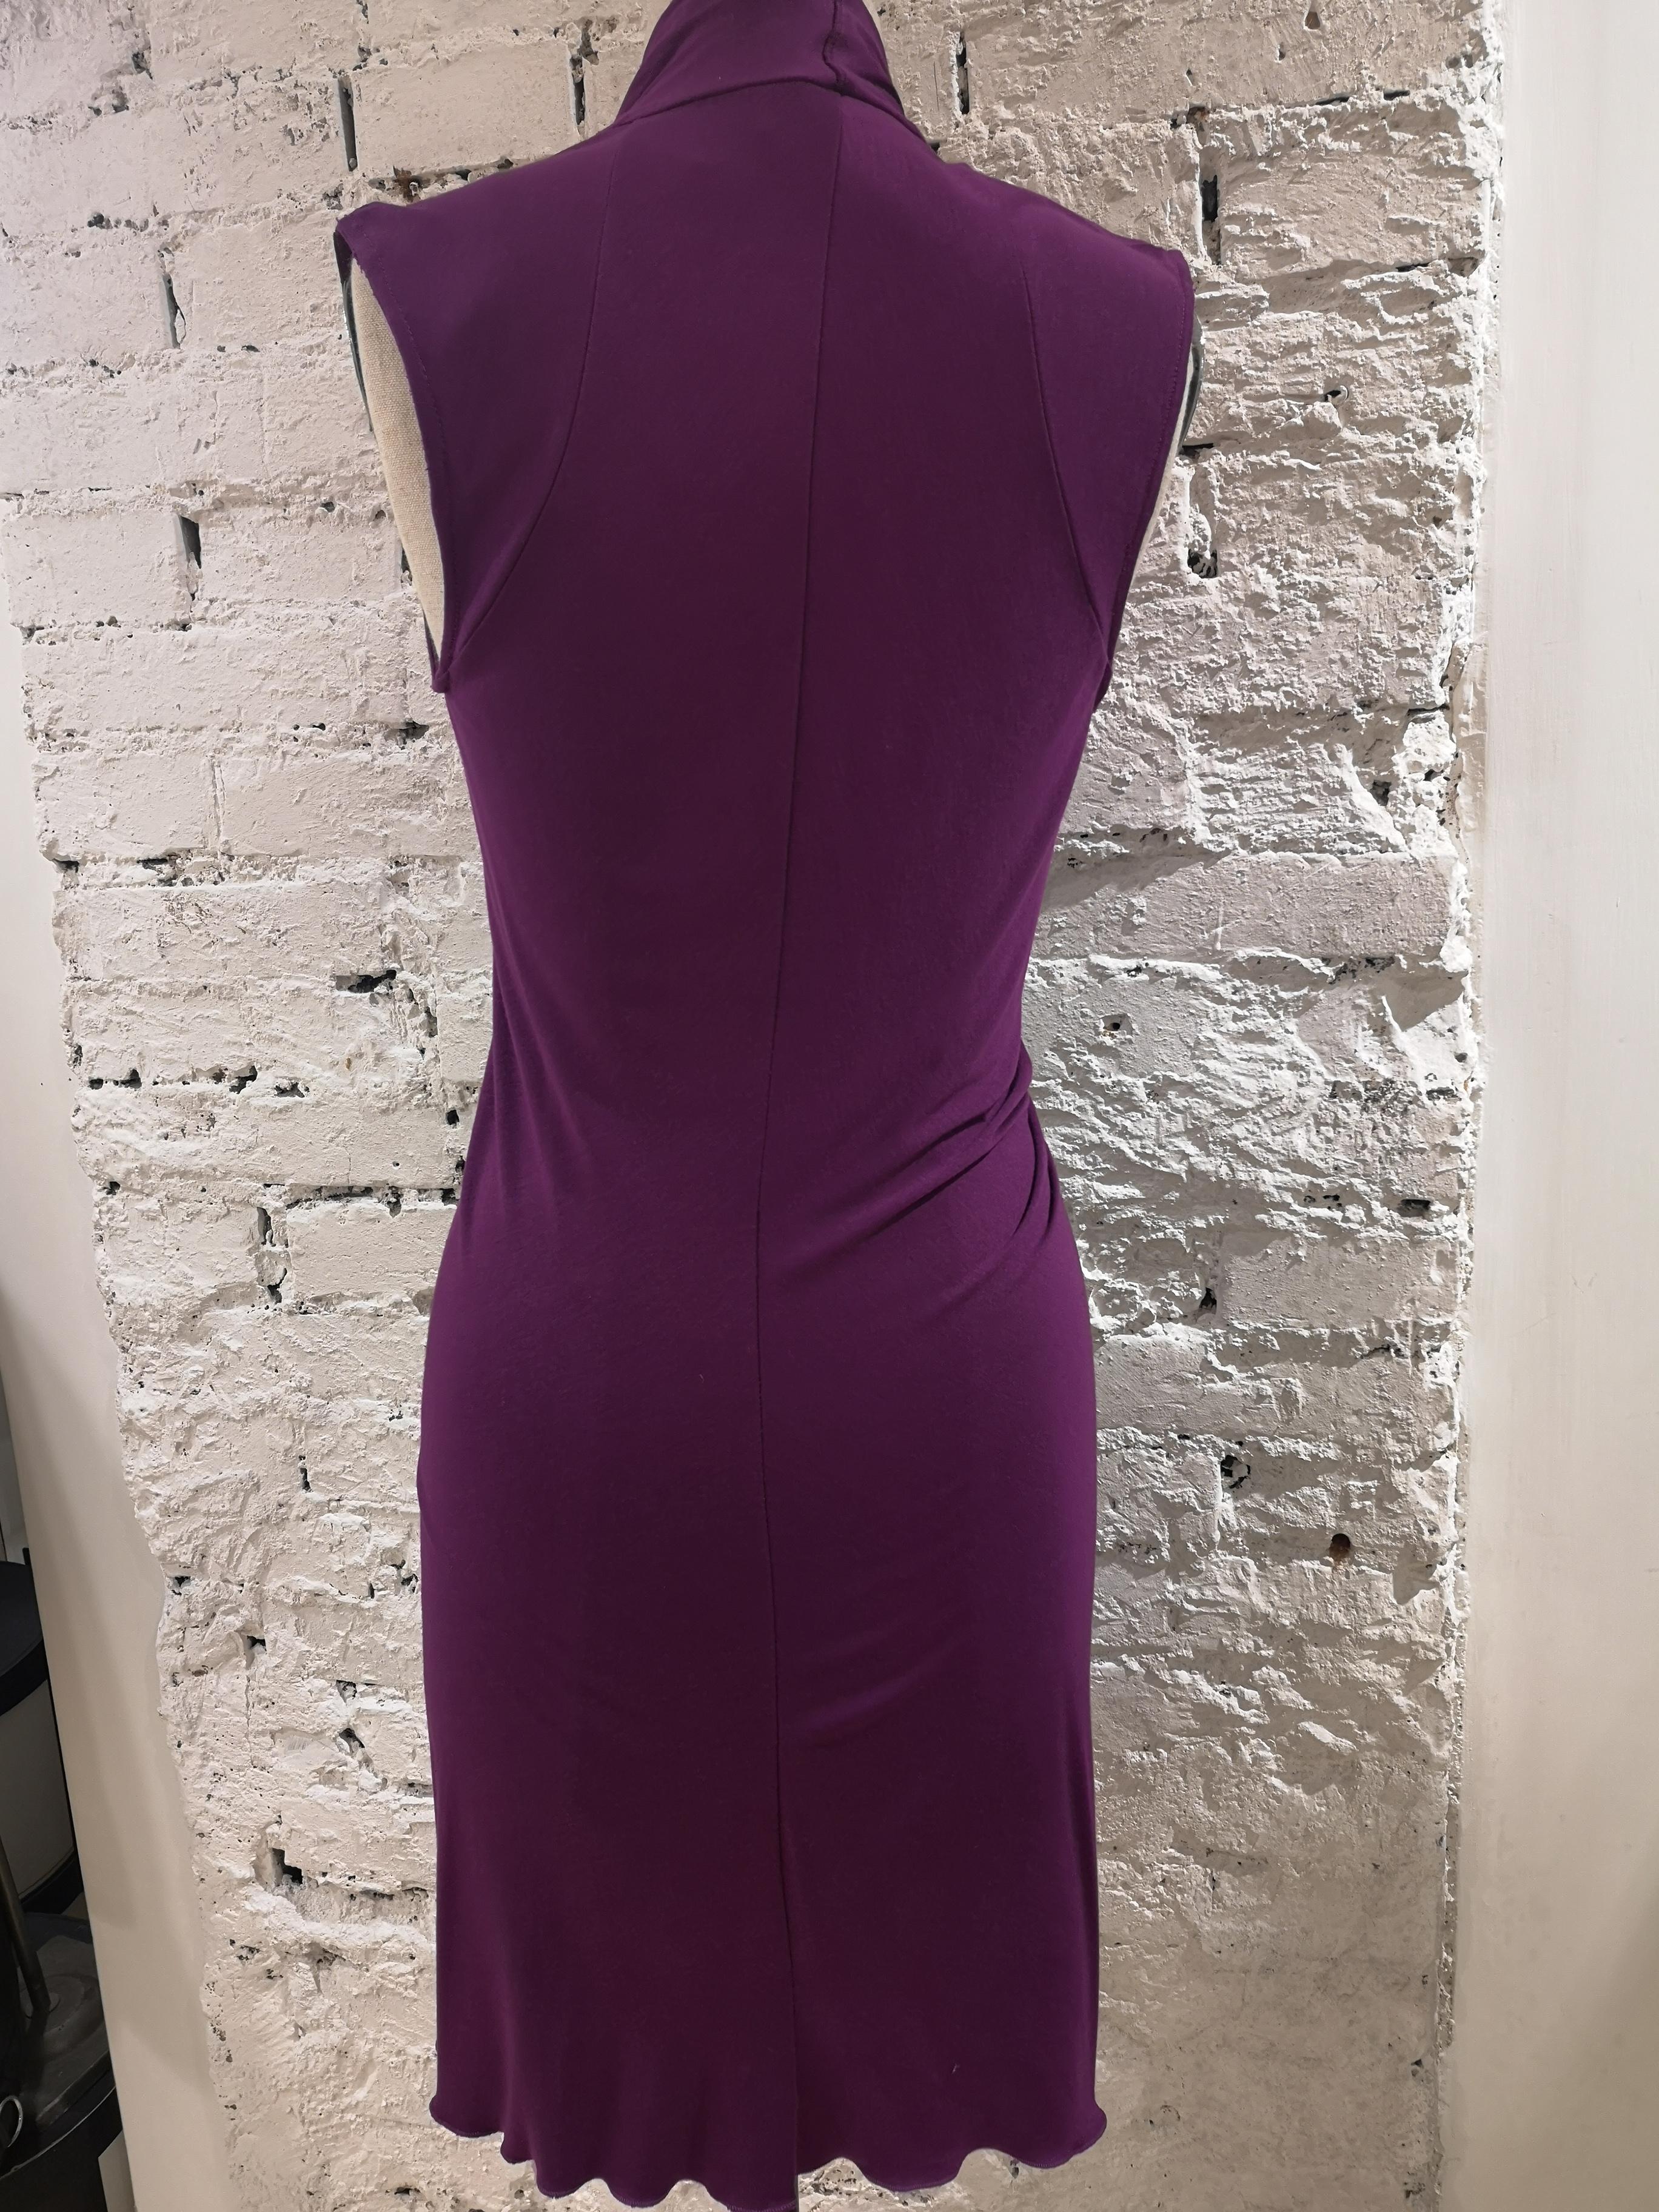 Yves Saint Laurent viscose purple Dress 2